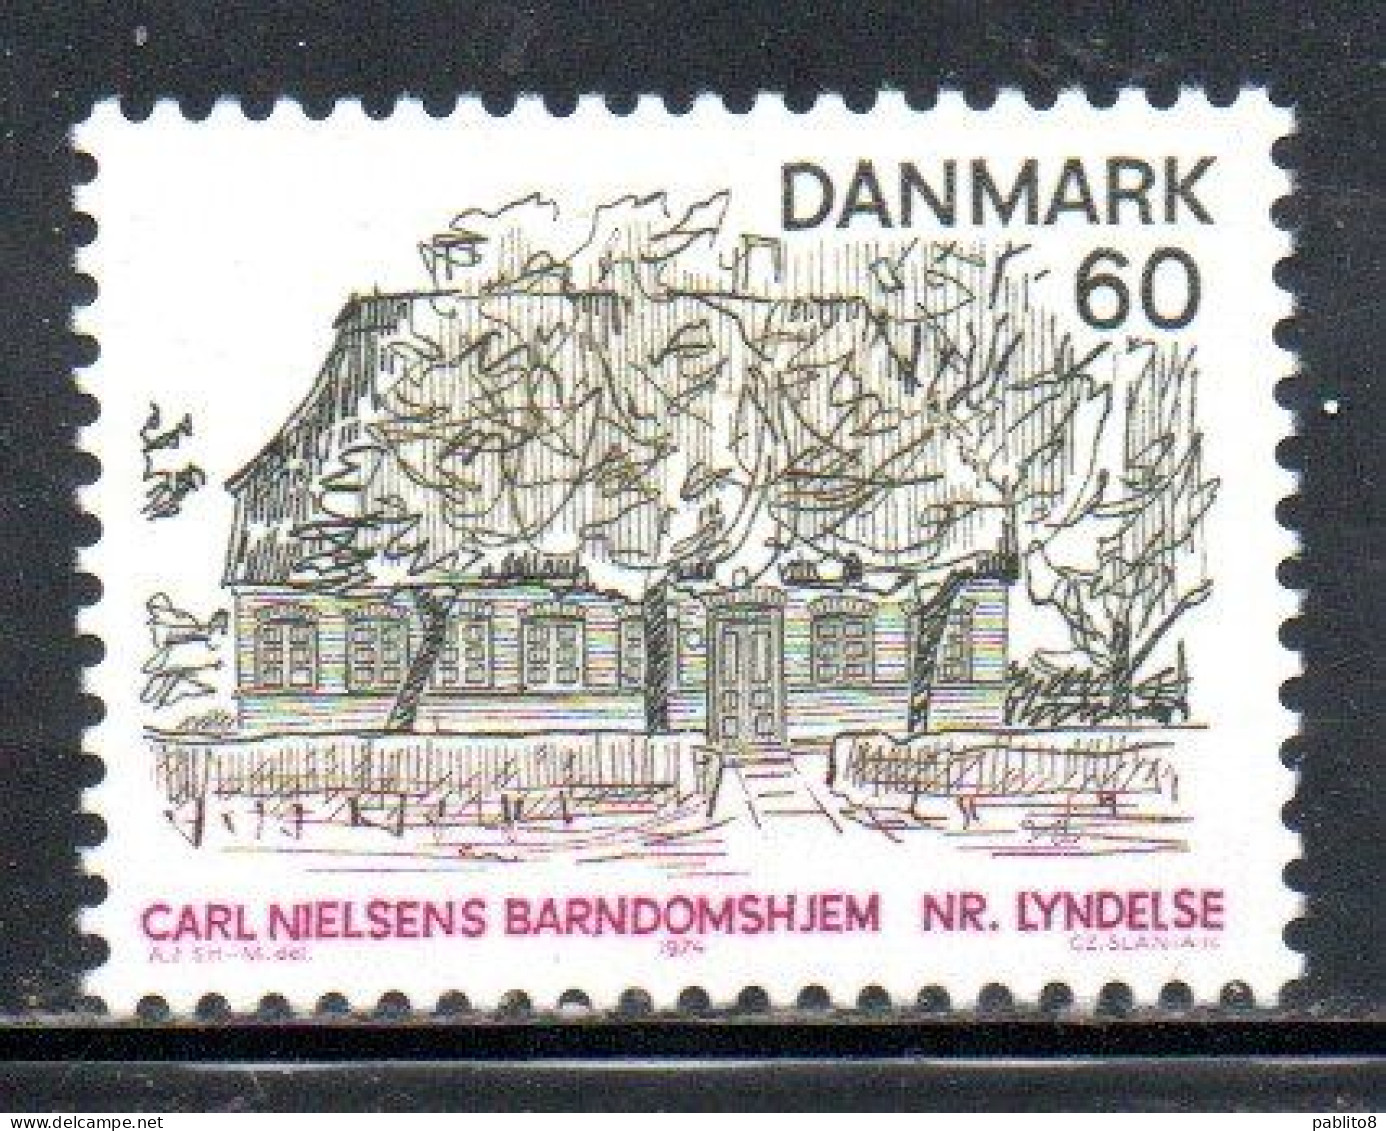 DANEMARK DANMARK DENMARK DANIMARCA 1974 VIEWS NORRE LYNDELSE CARL NIELSEN'S CHILDHOOD HOME 60o MNH - Unused Stamps